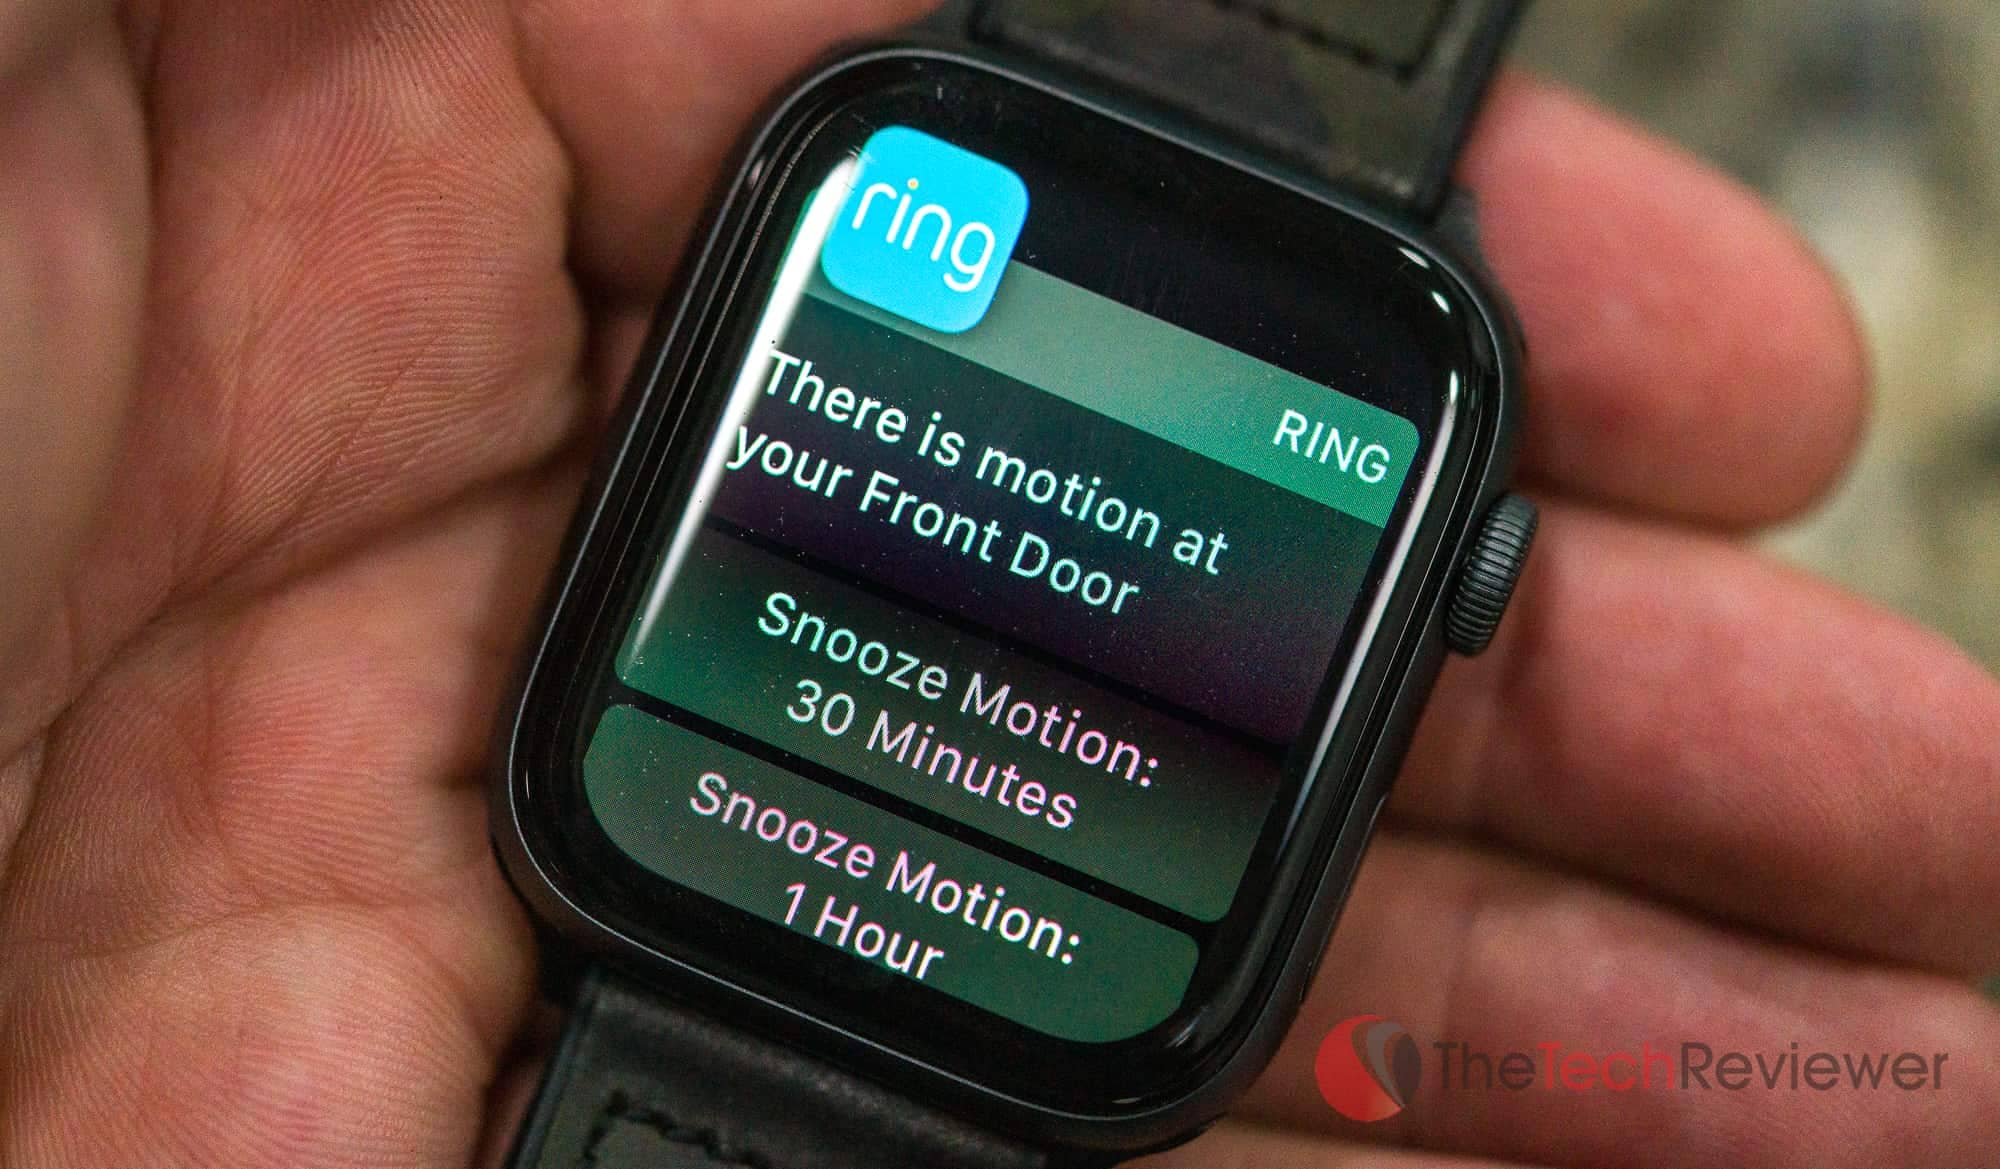 Apple Watch Ring Notification